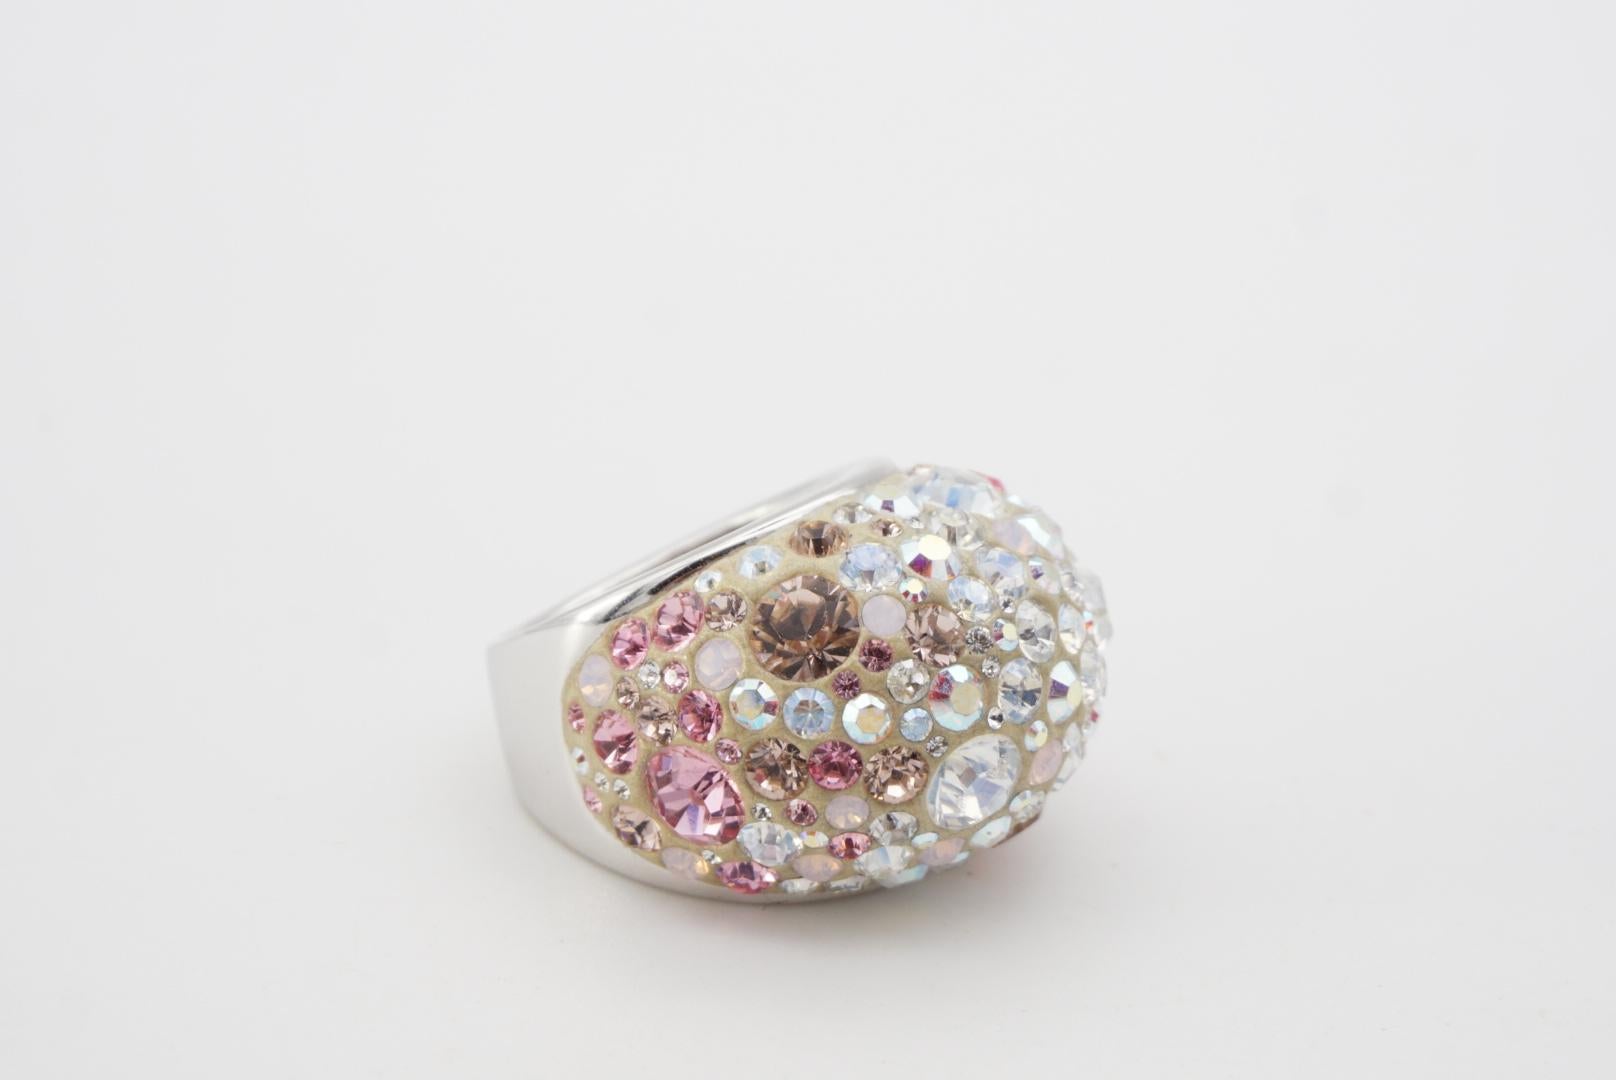 Swarovski Nirvana Fully Cut Crystal Glitter Pink White Chunky Ring, Size 55 UK N For Sale 2